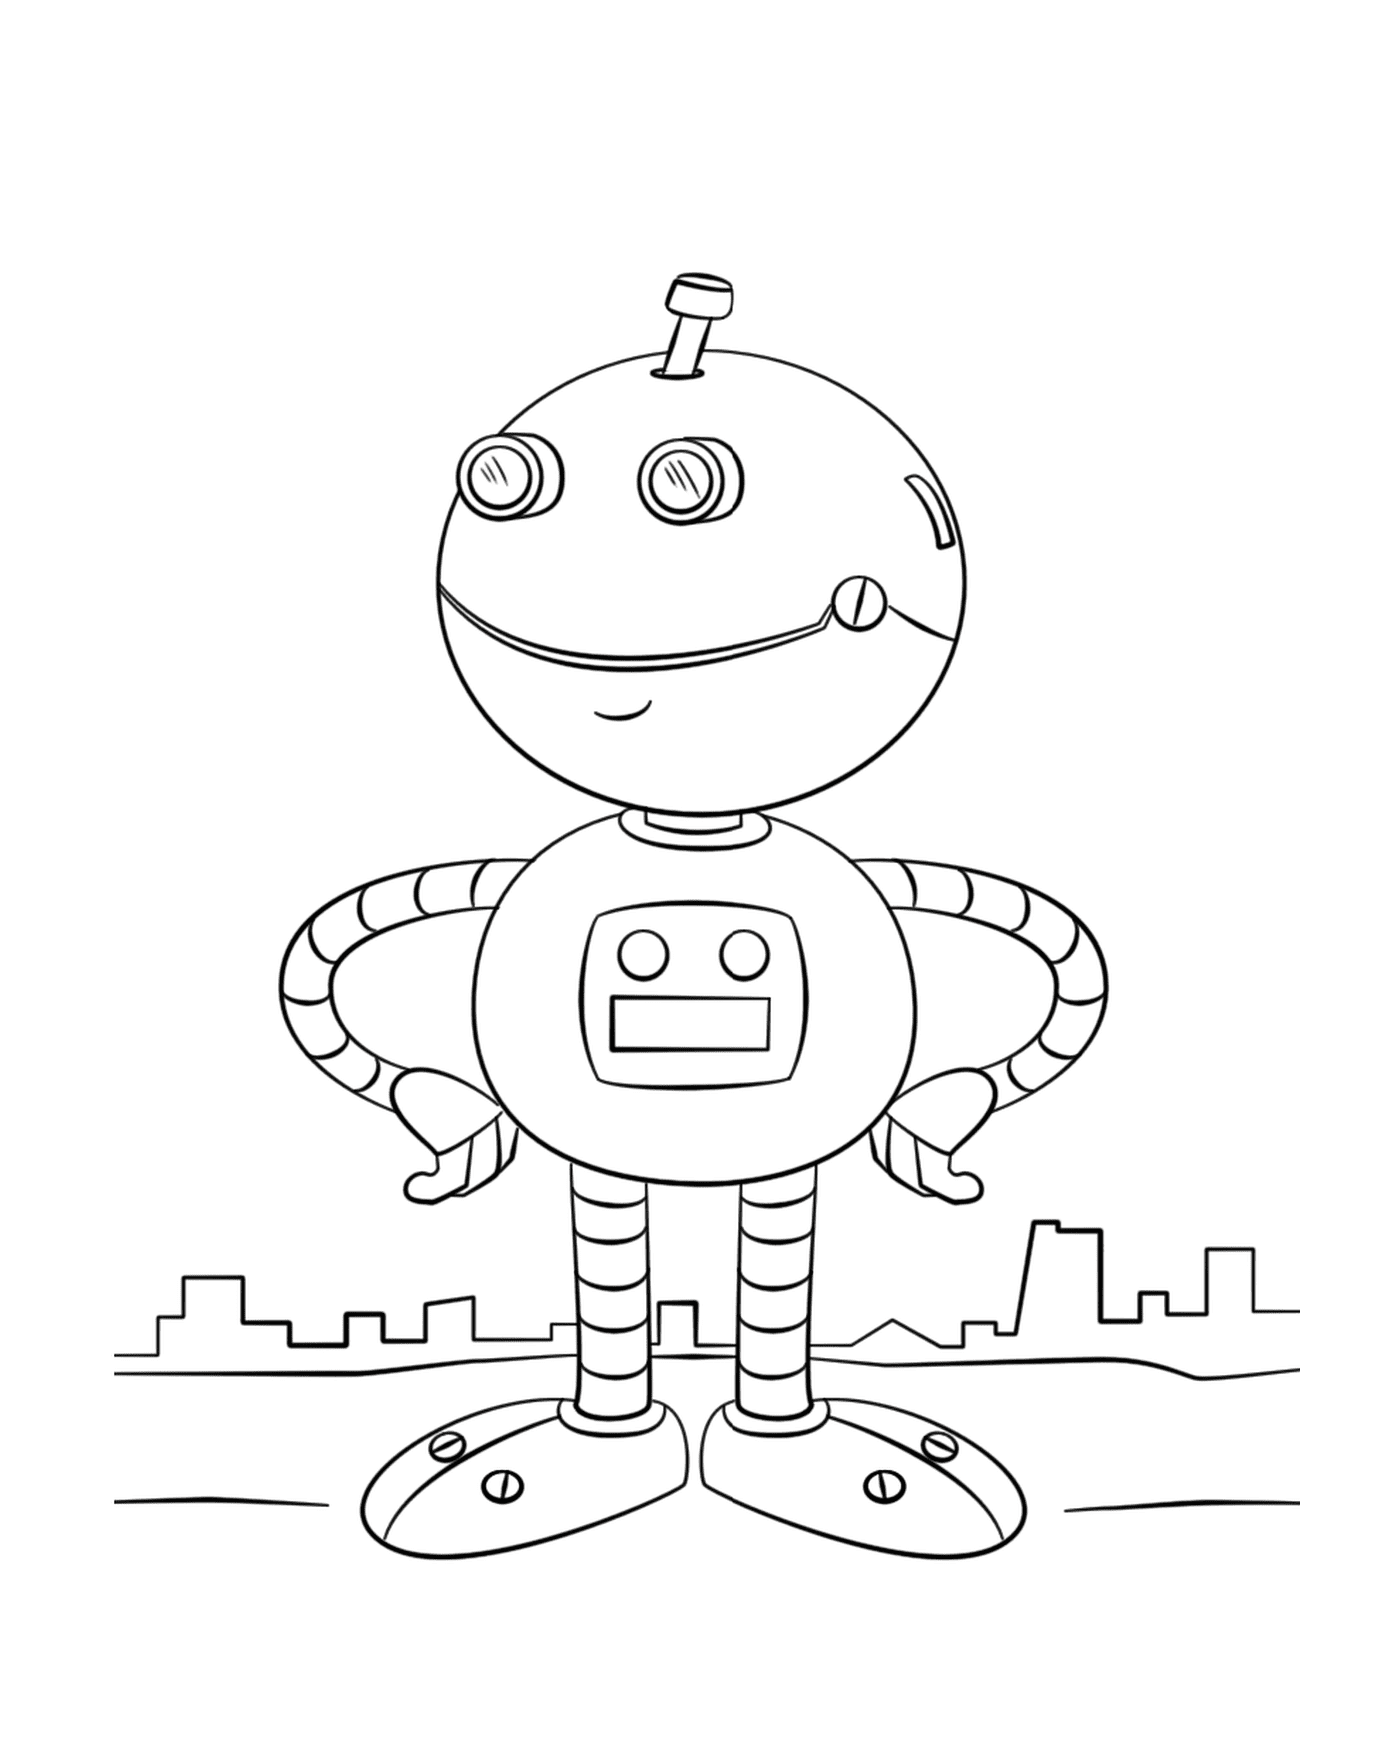  Cute cartoon robot by Lena London 